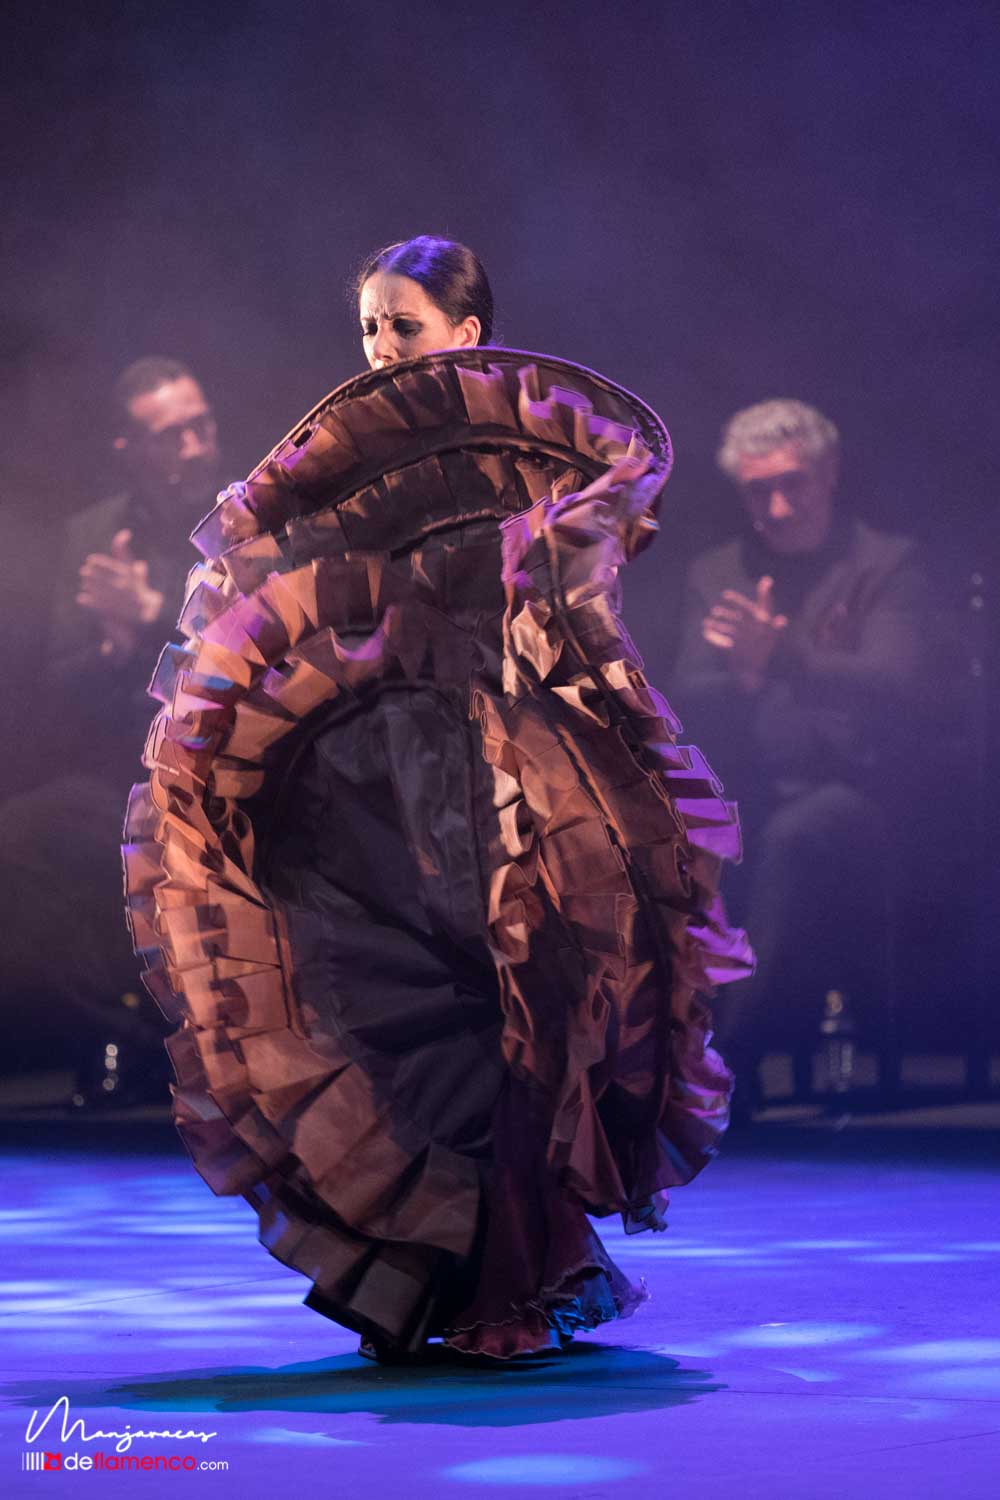 Eva Yerbabuena "DMadrugá" - Suma Flamenca